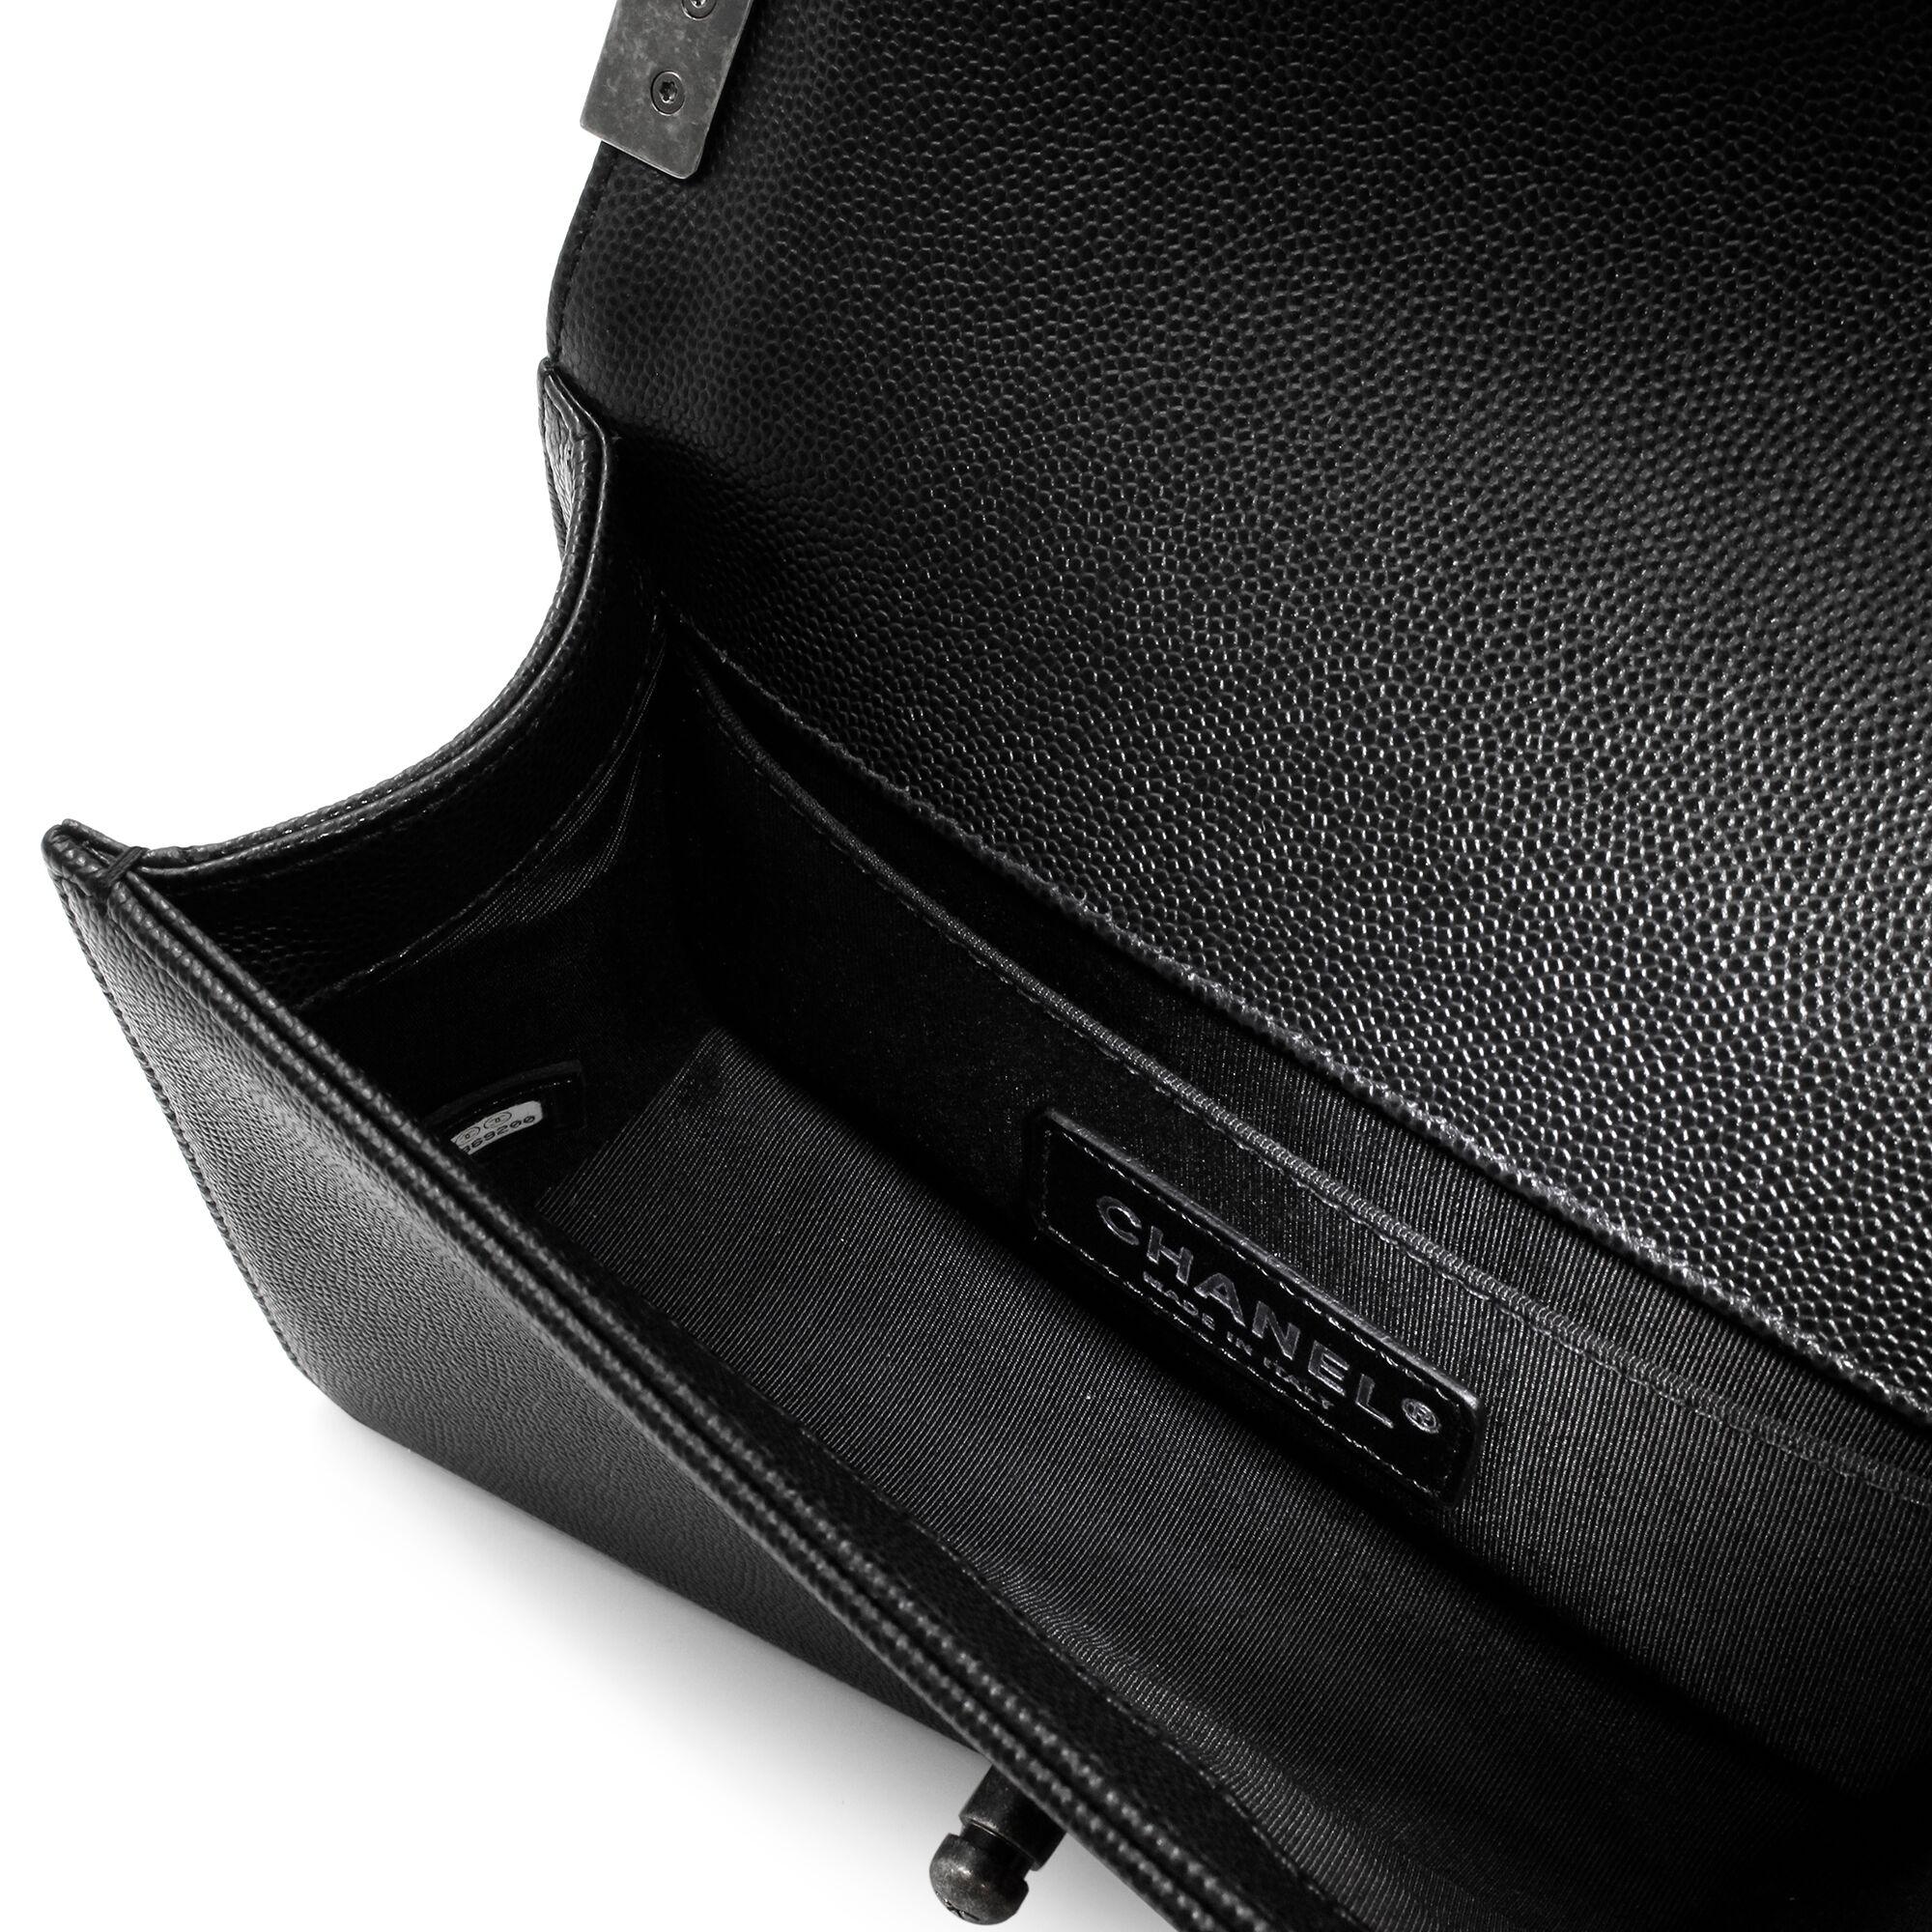 Chanel Black Caviar Leather & Ruthenium Finish Metal Small Boy Bag A67085 2